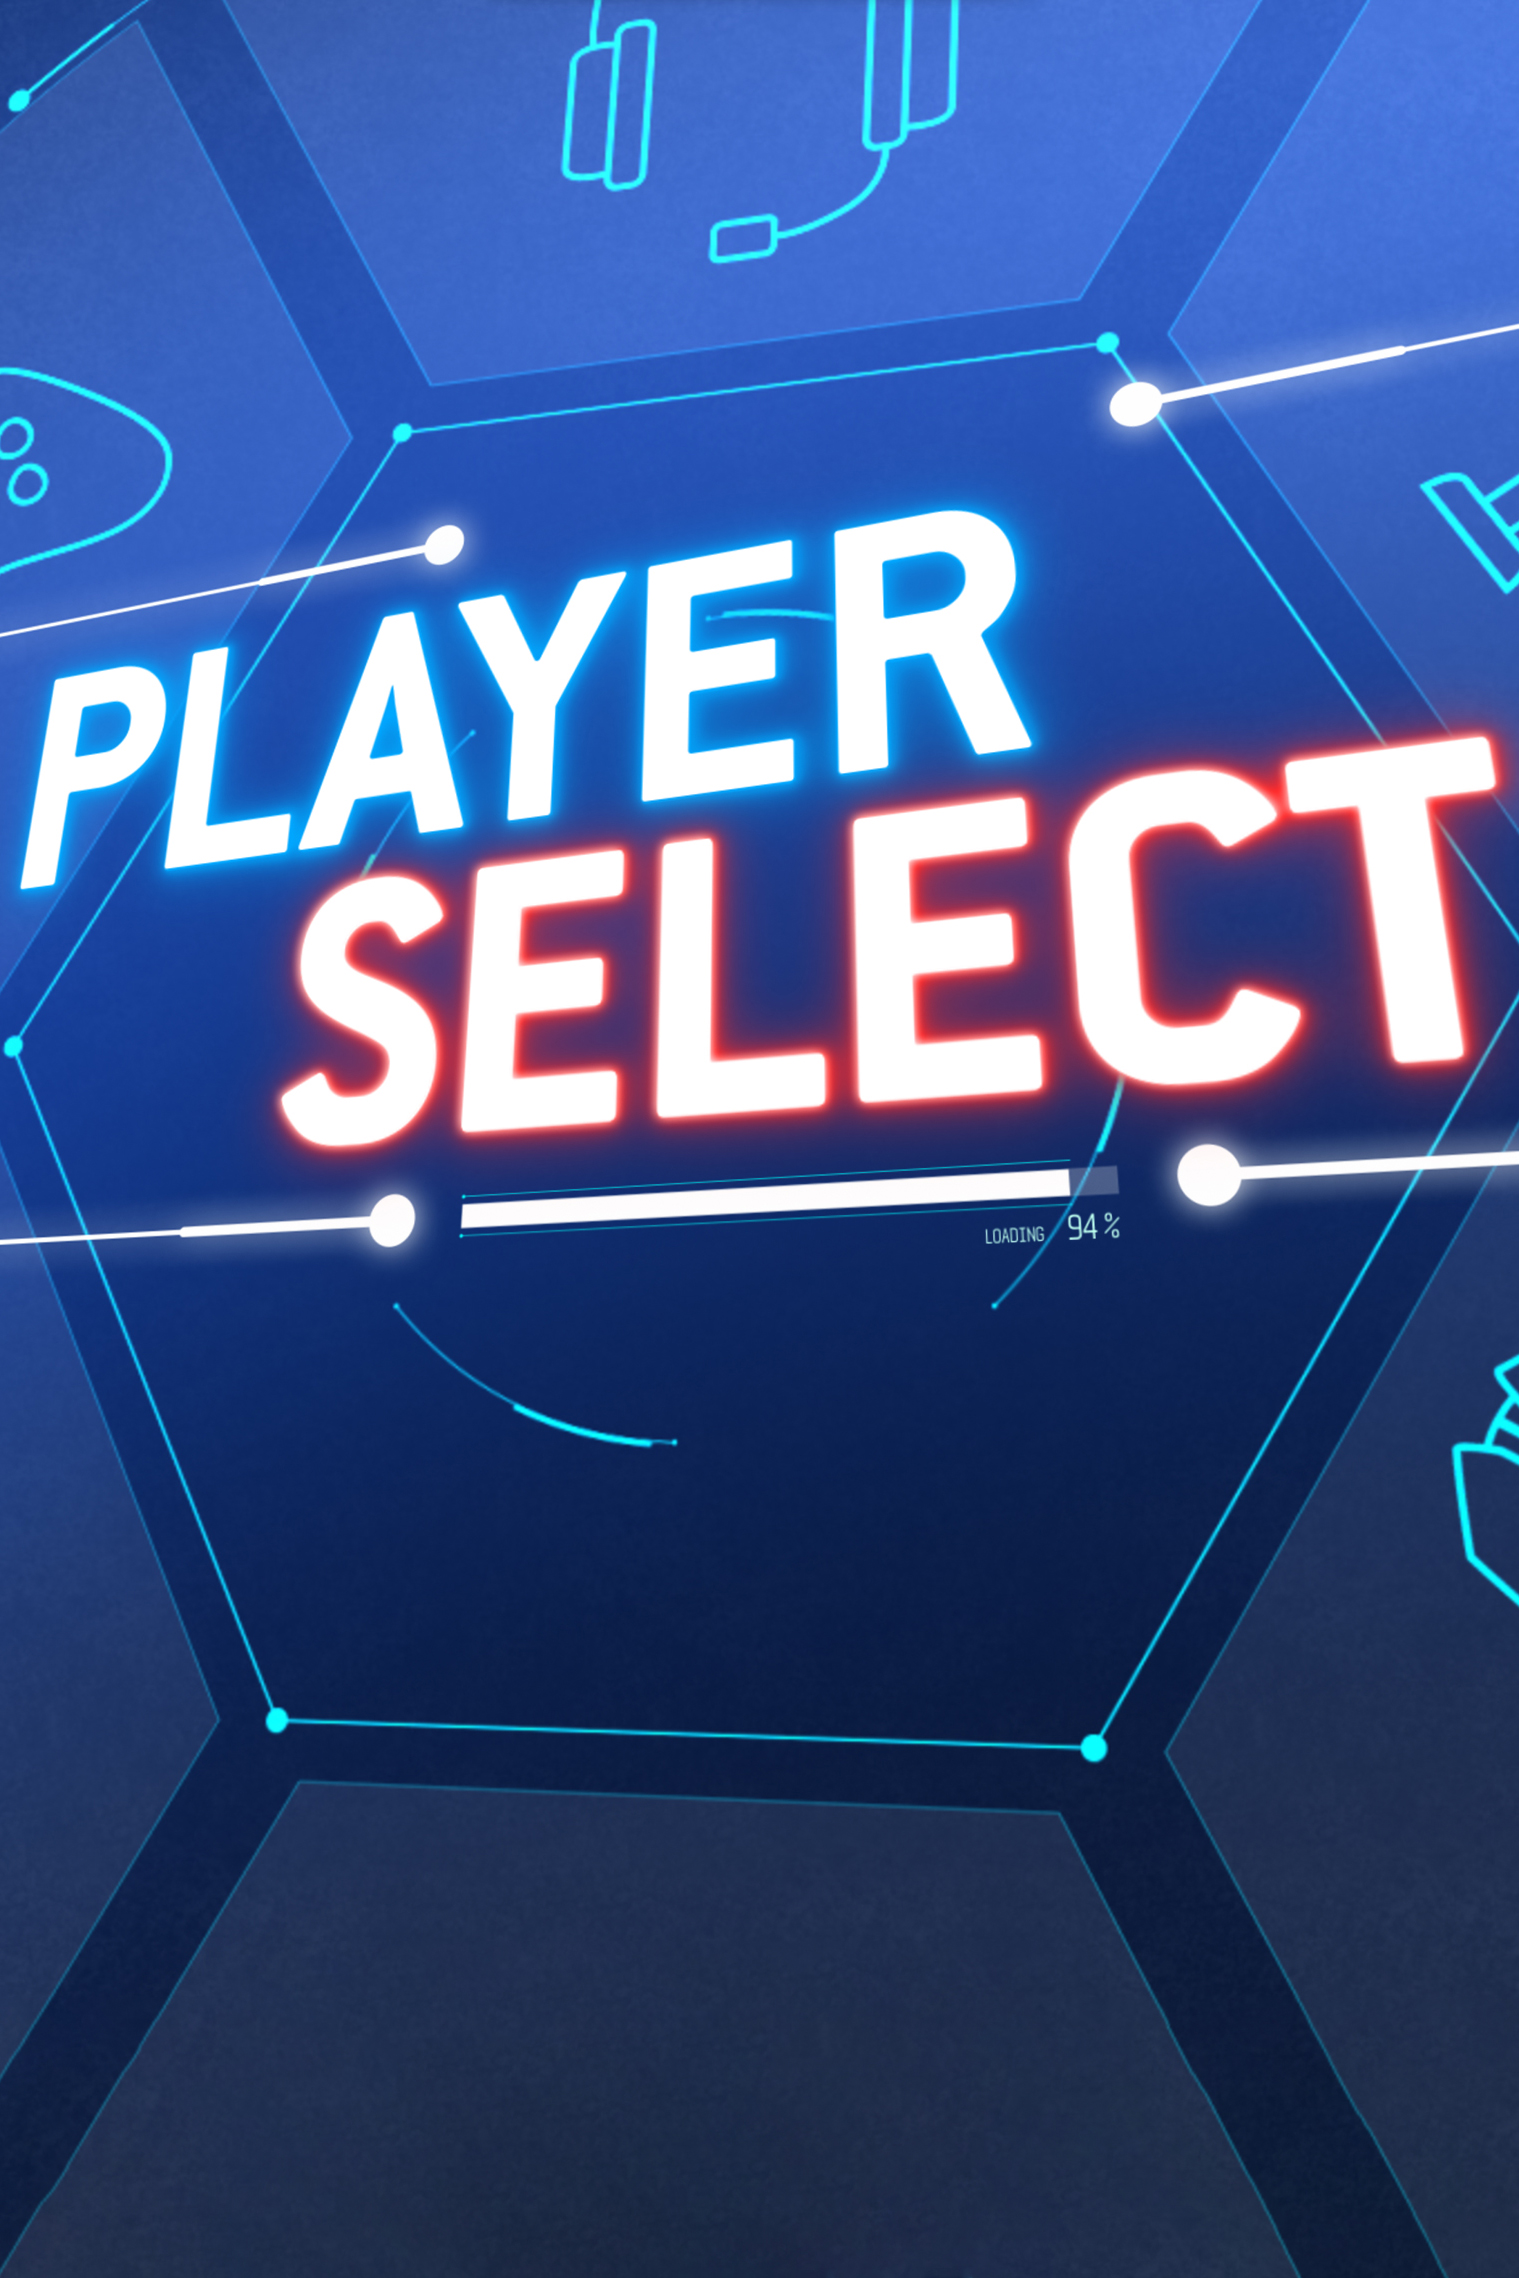 Selected player. Select плеер. Elect канал.